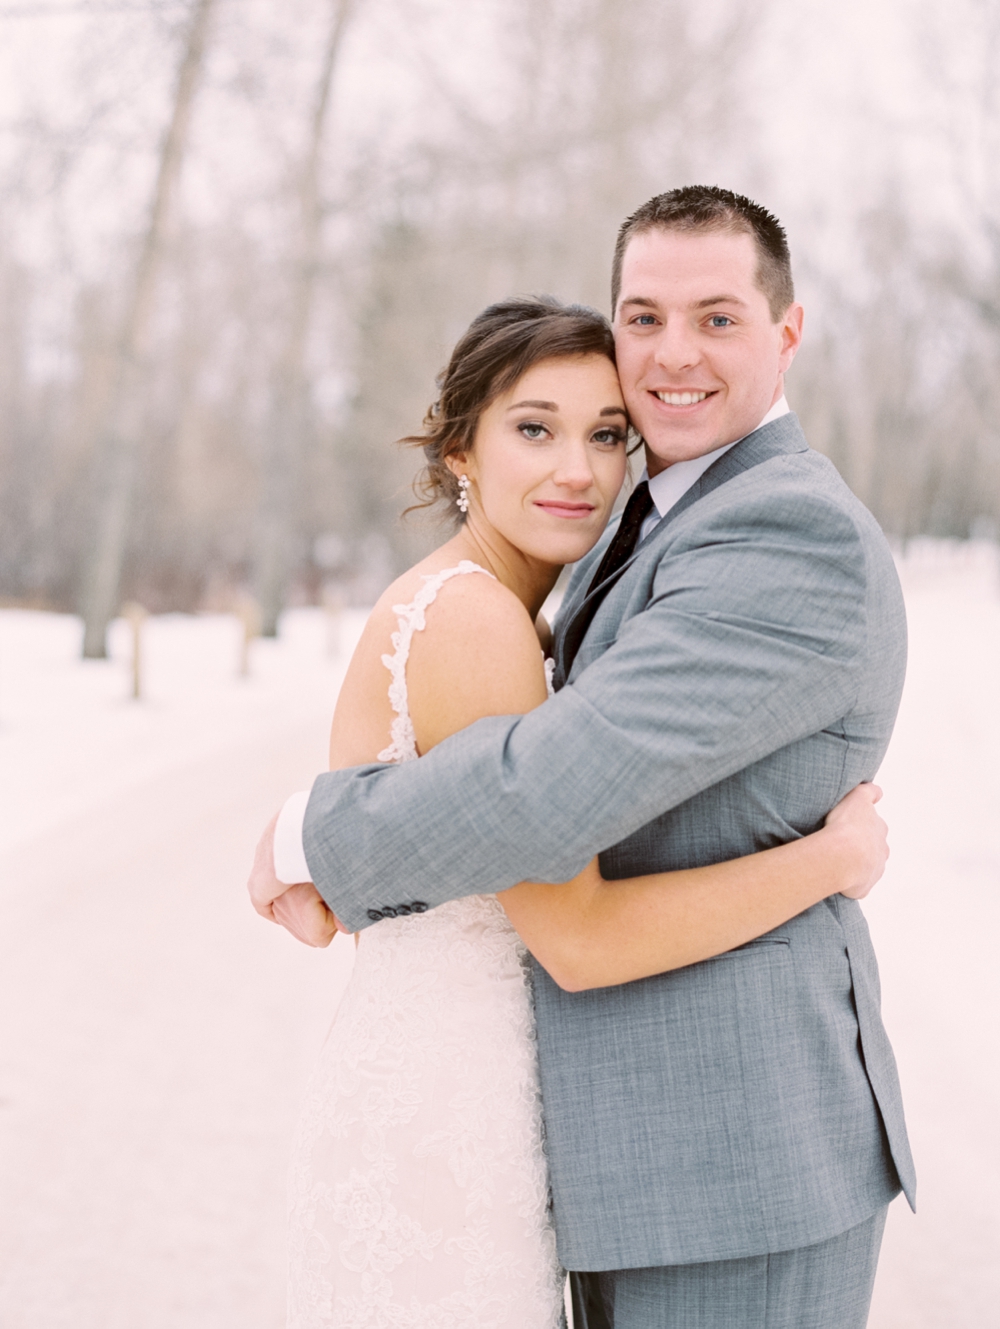 Winter wedding | Calgary wedding photographer | snowy weddings